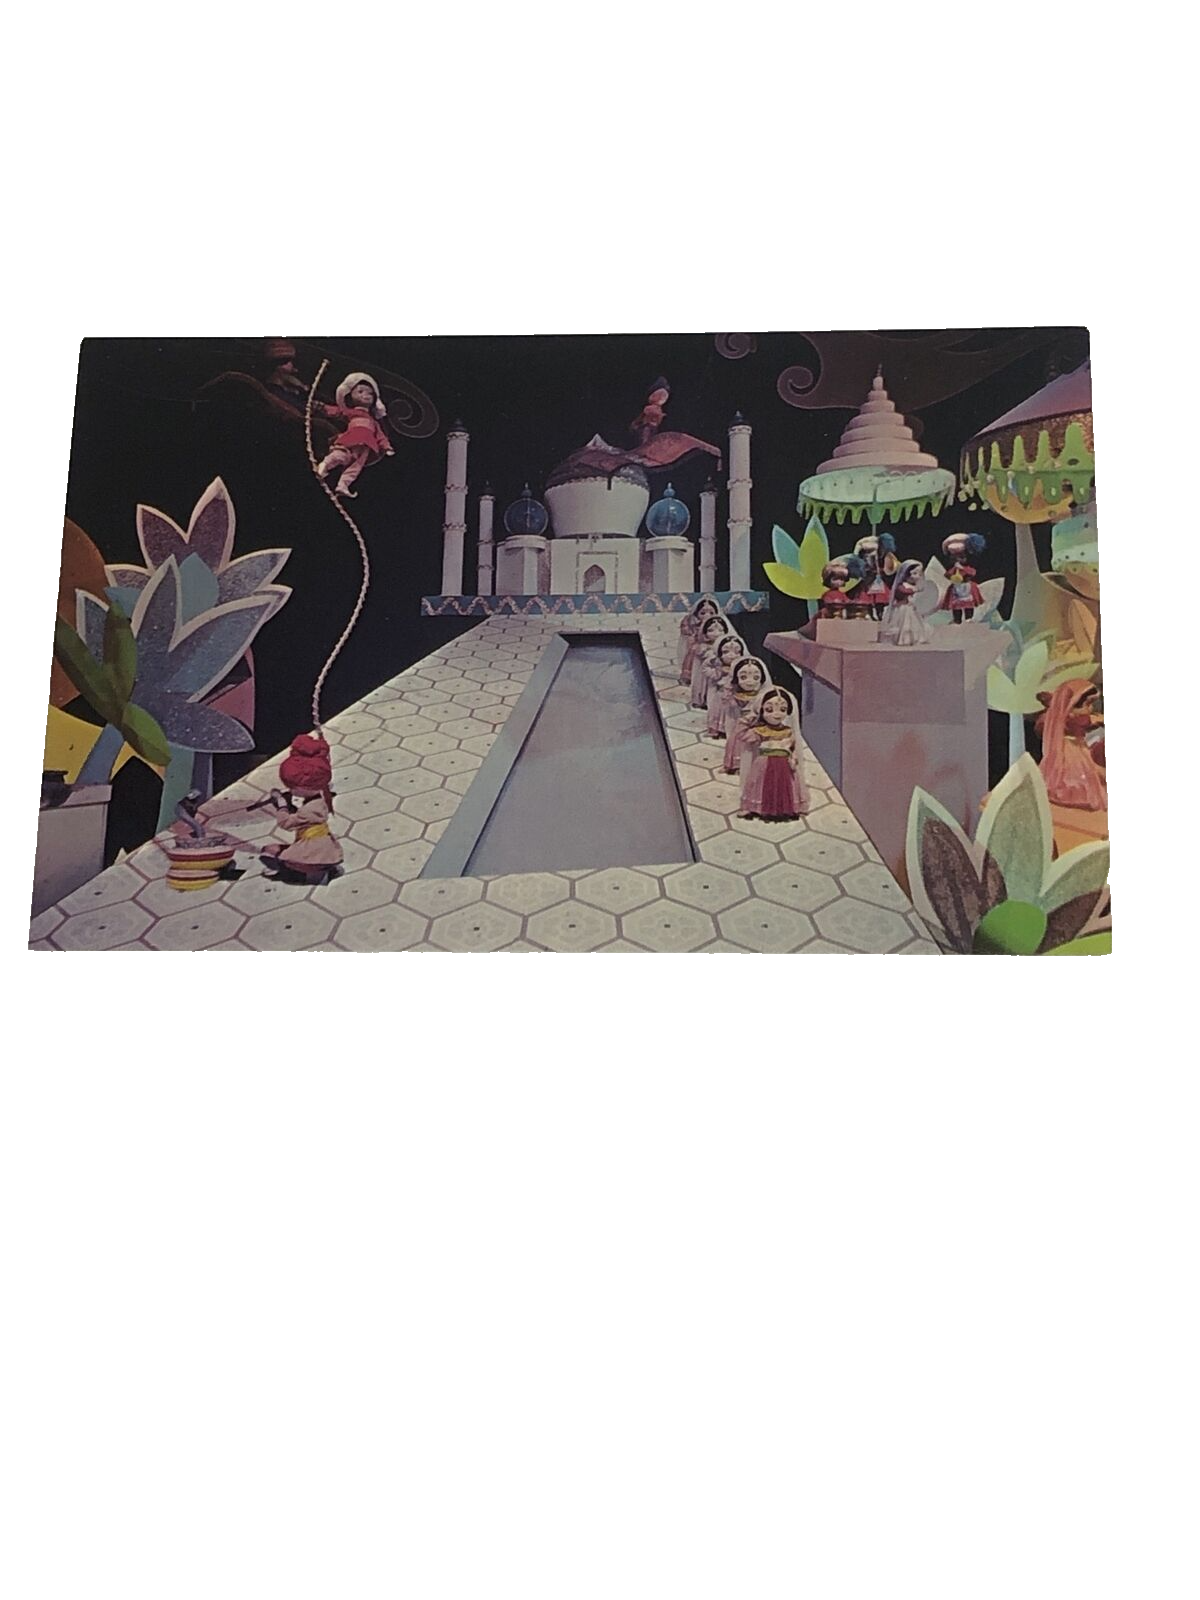 Primary image for 1969 Disneyland Fantasyland India Small World Boat Ride Magic Kingdom postcard